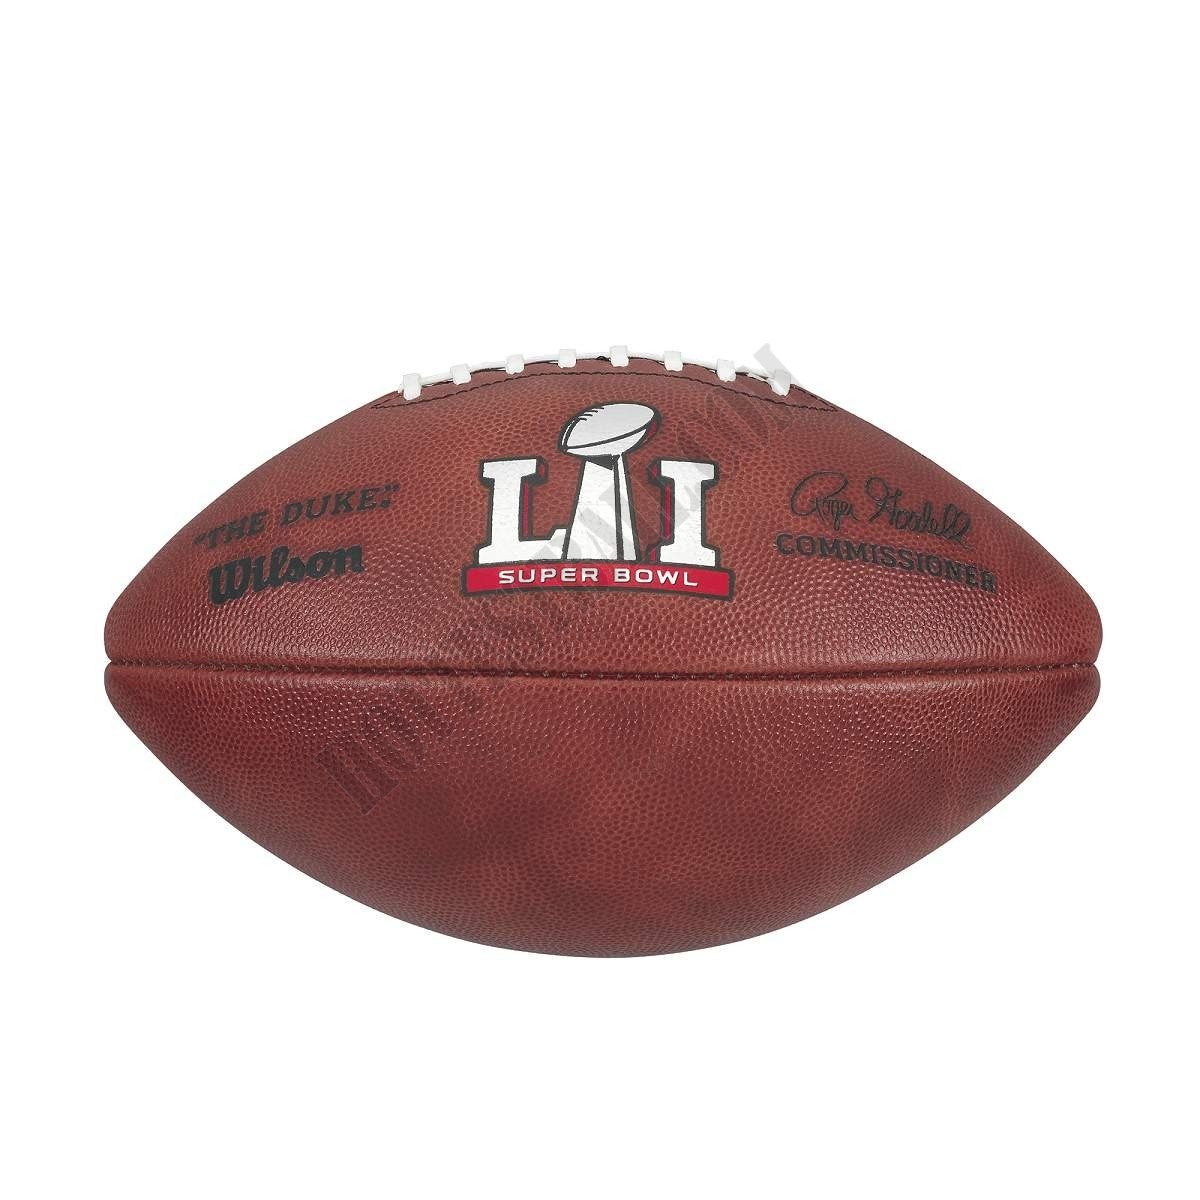 Super Bowl LI Game Football - New England Patriots ● Wilson Promotions - -2